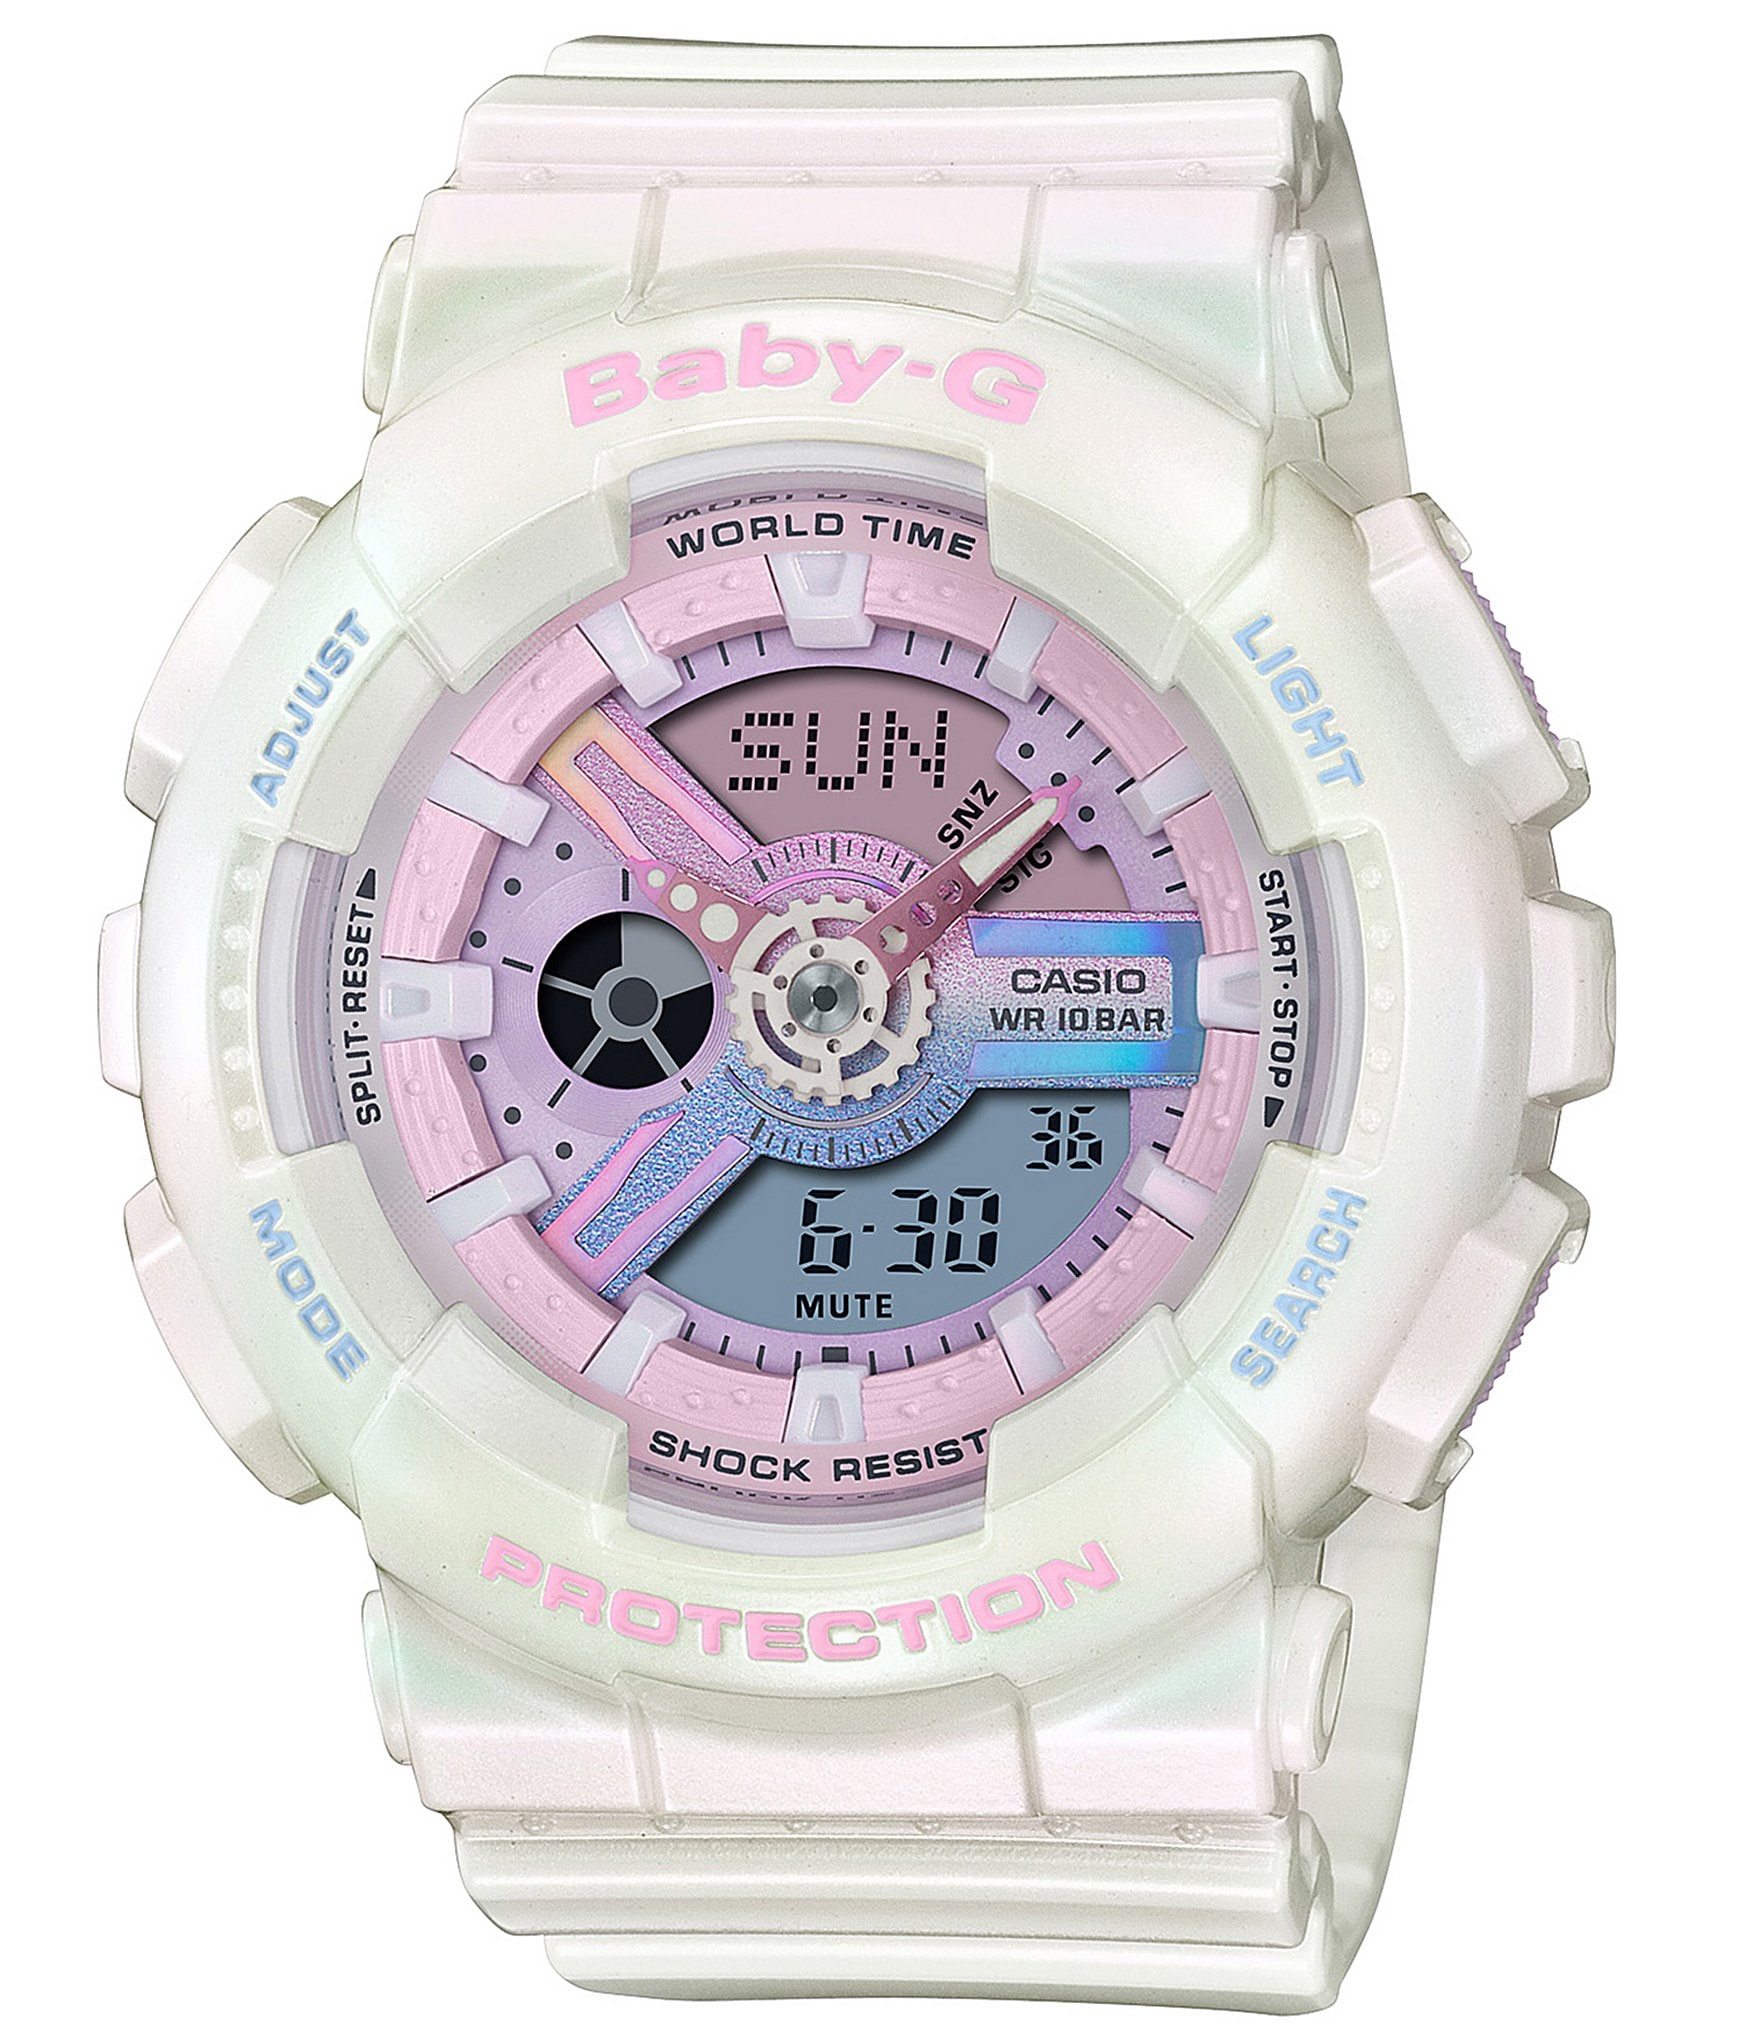 G-Shock Baby-G Ana Digi White Shock Resistant Watch | Dillard's